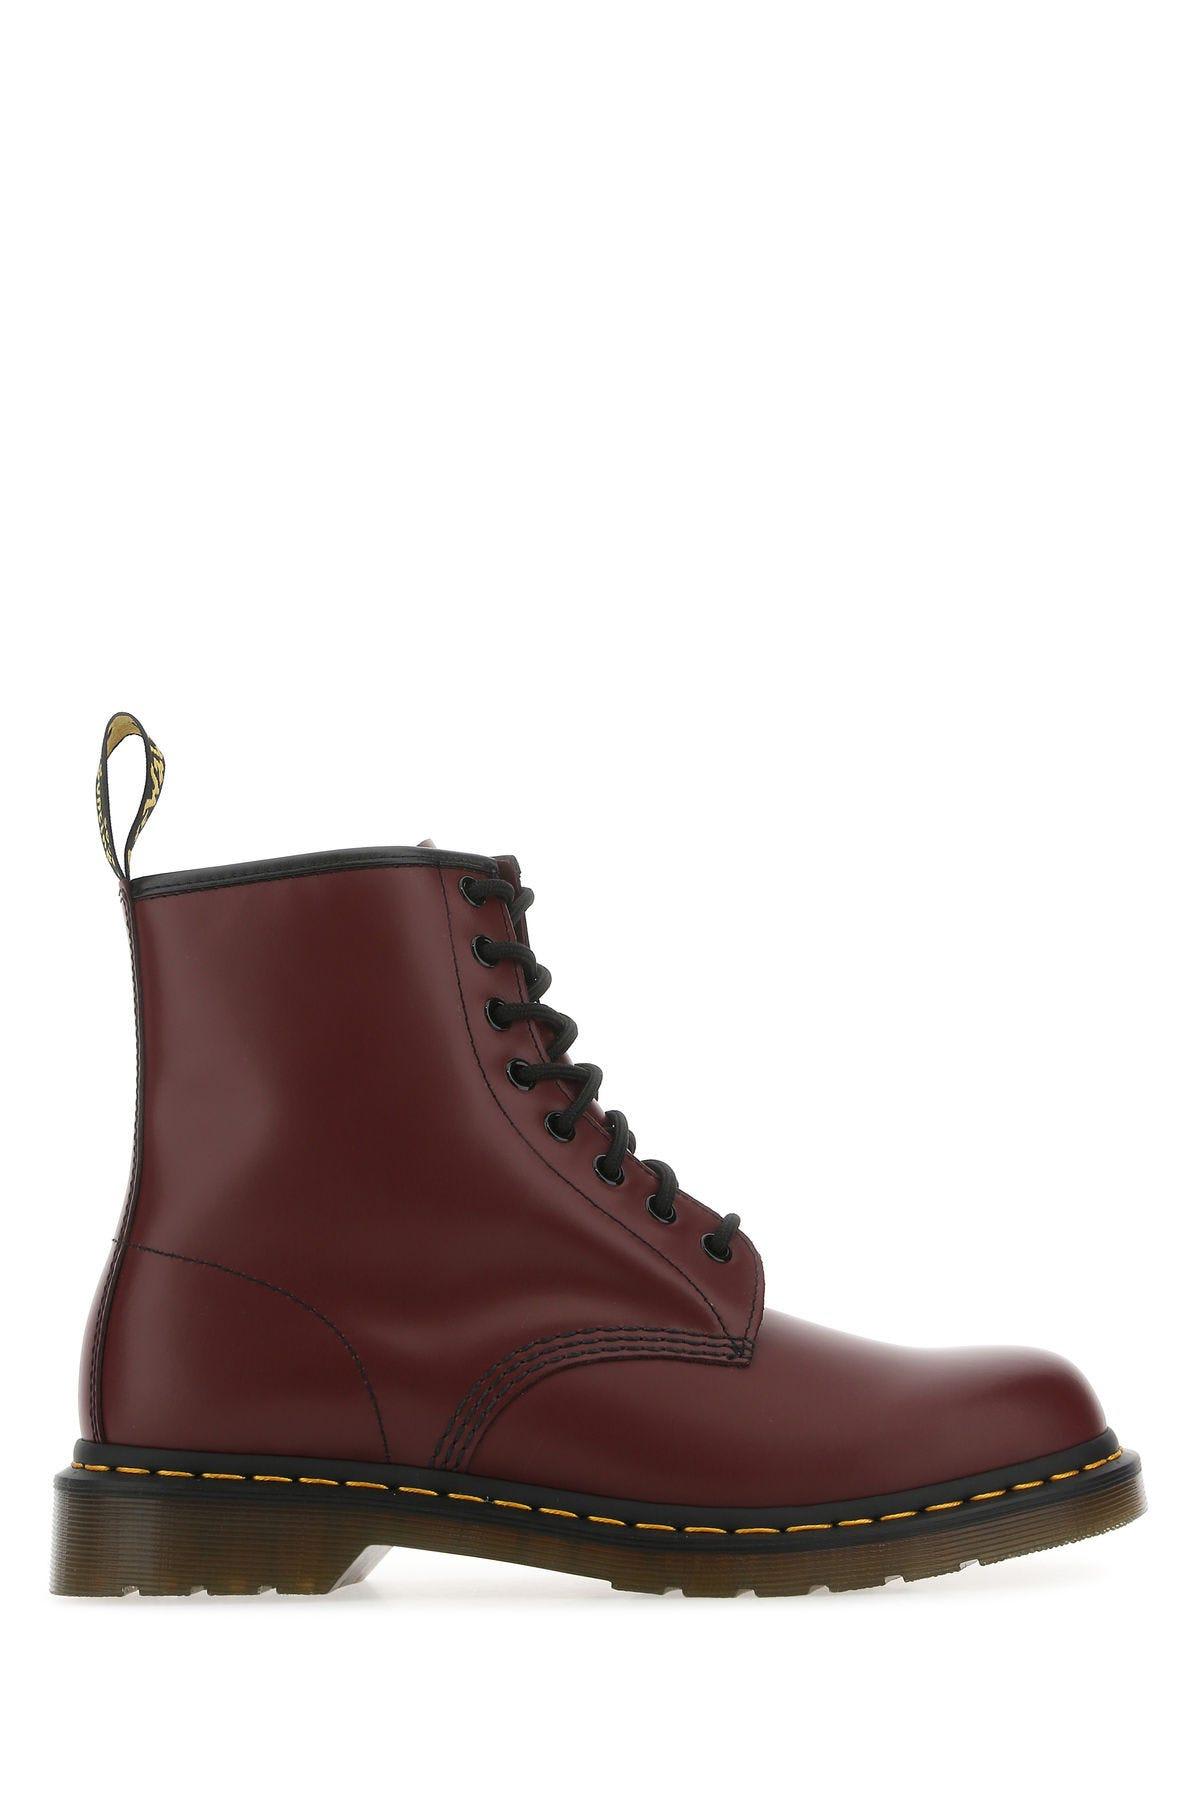 Shop Dr. Martens' Burgundy Leather 1460 Ankle Boots